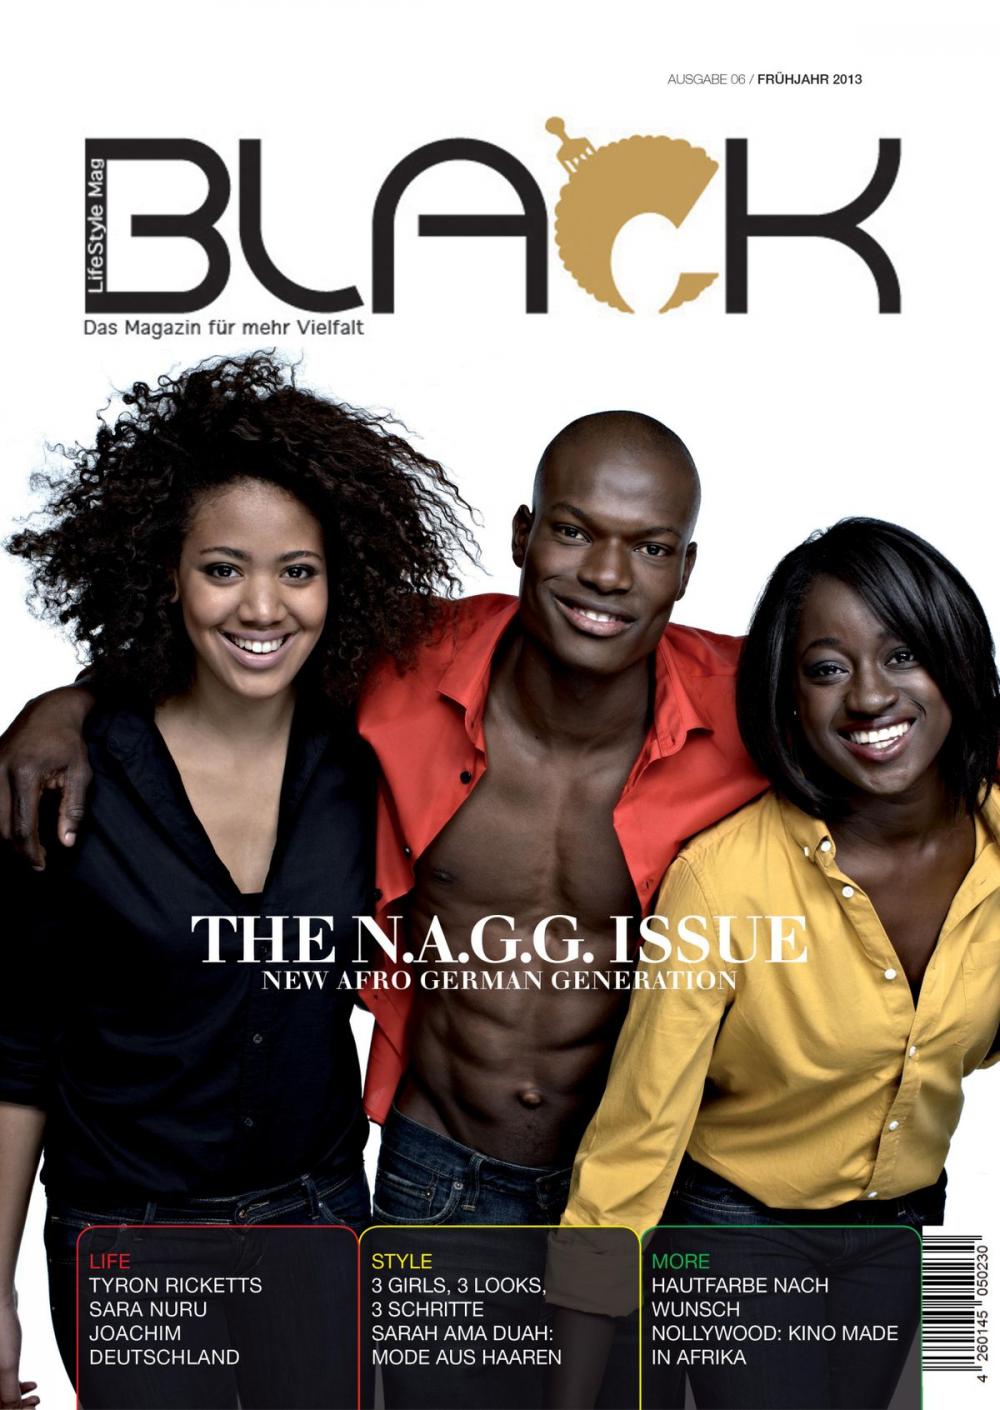 Big bigCover of Black Lifestyle Mag